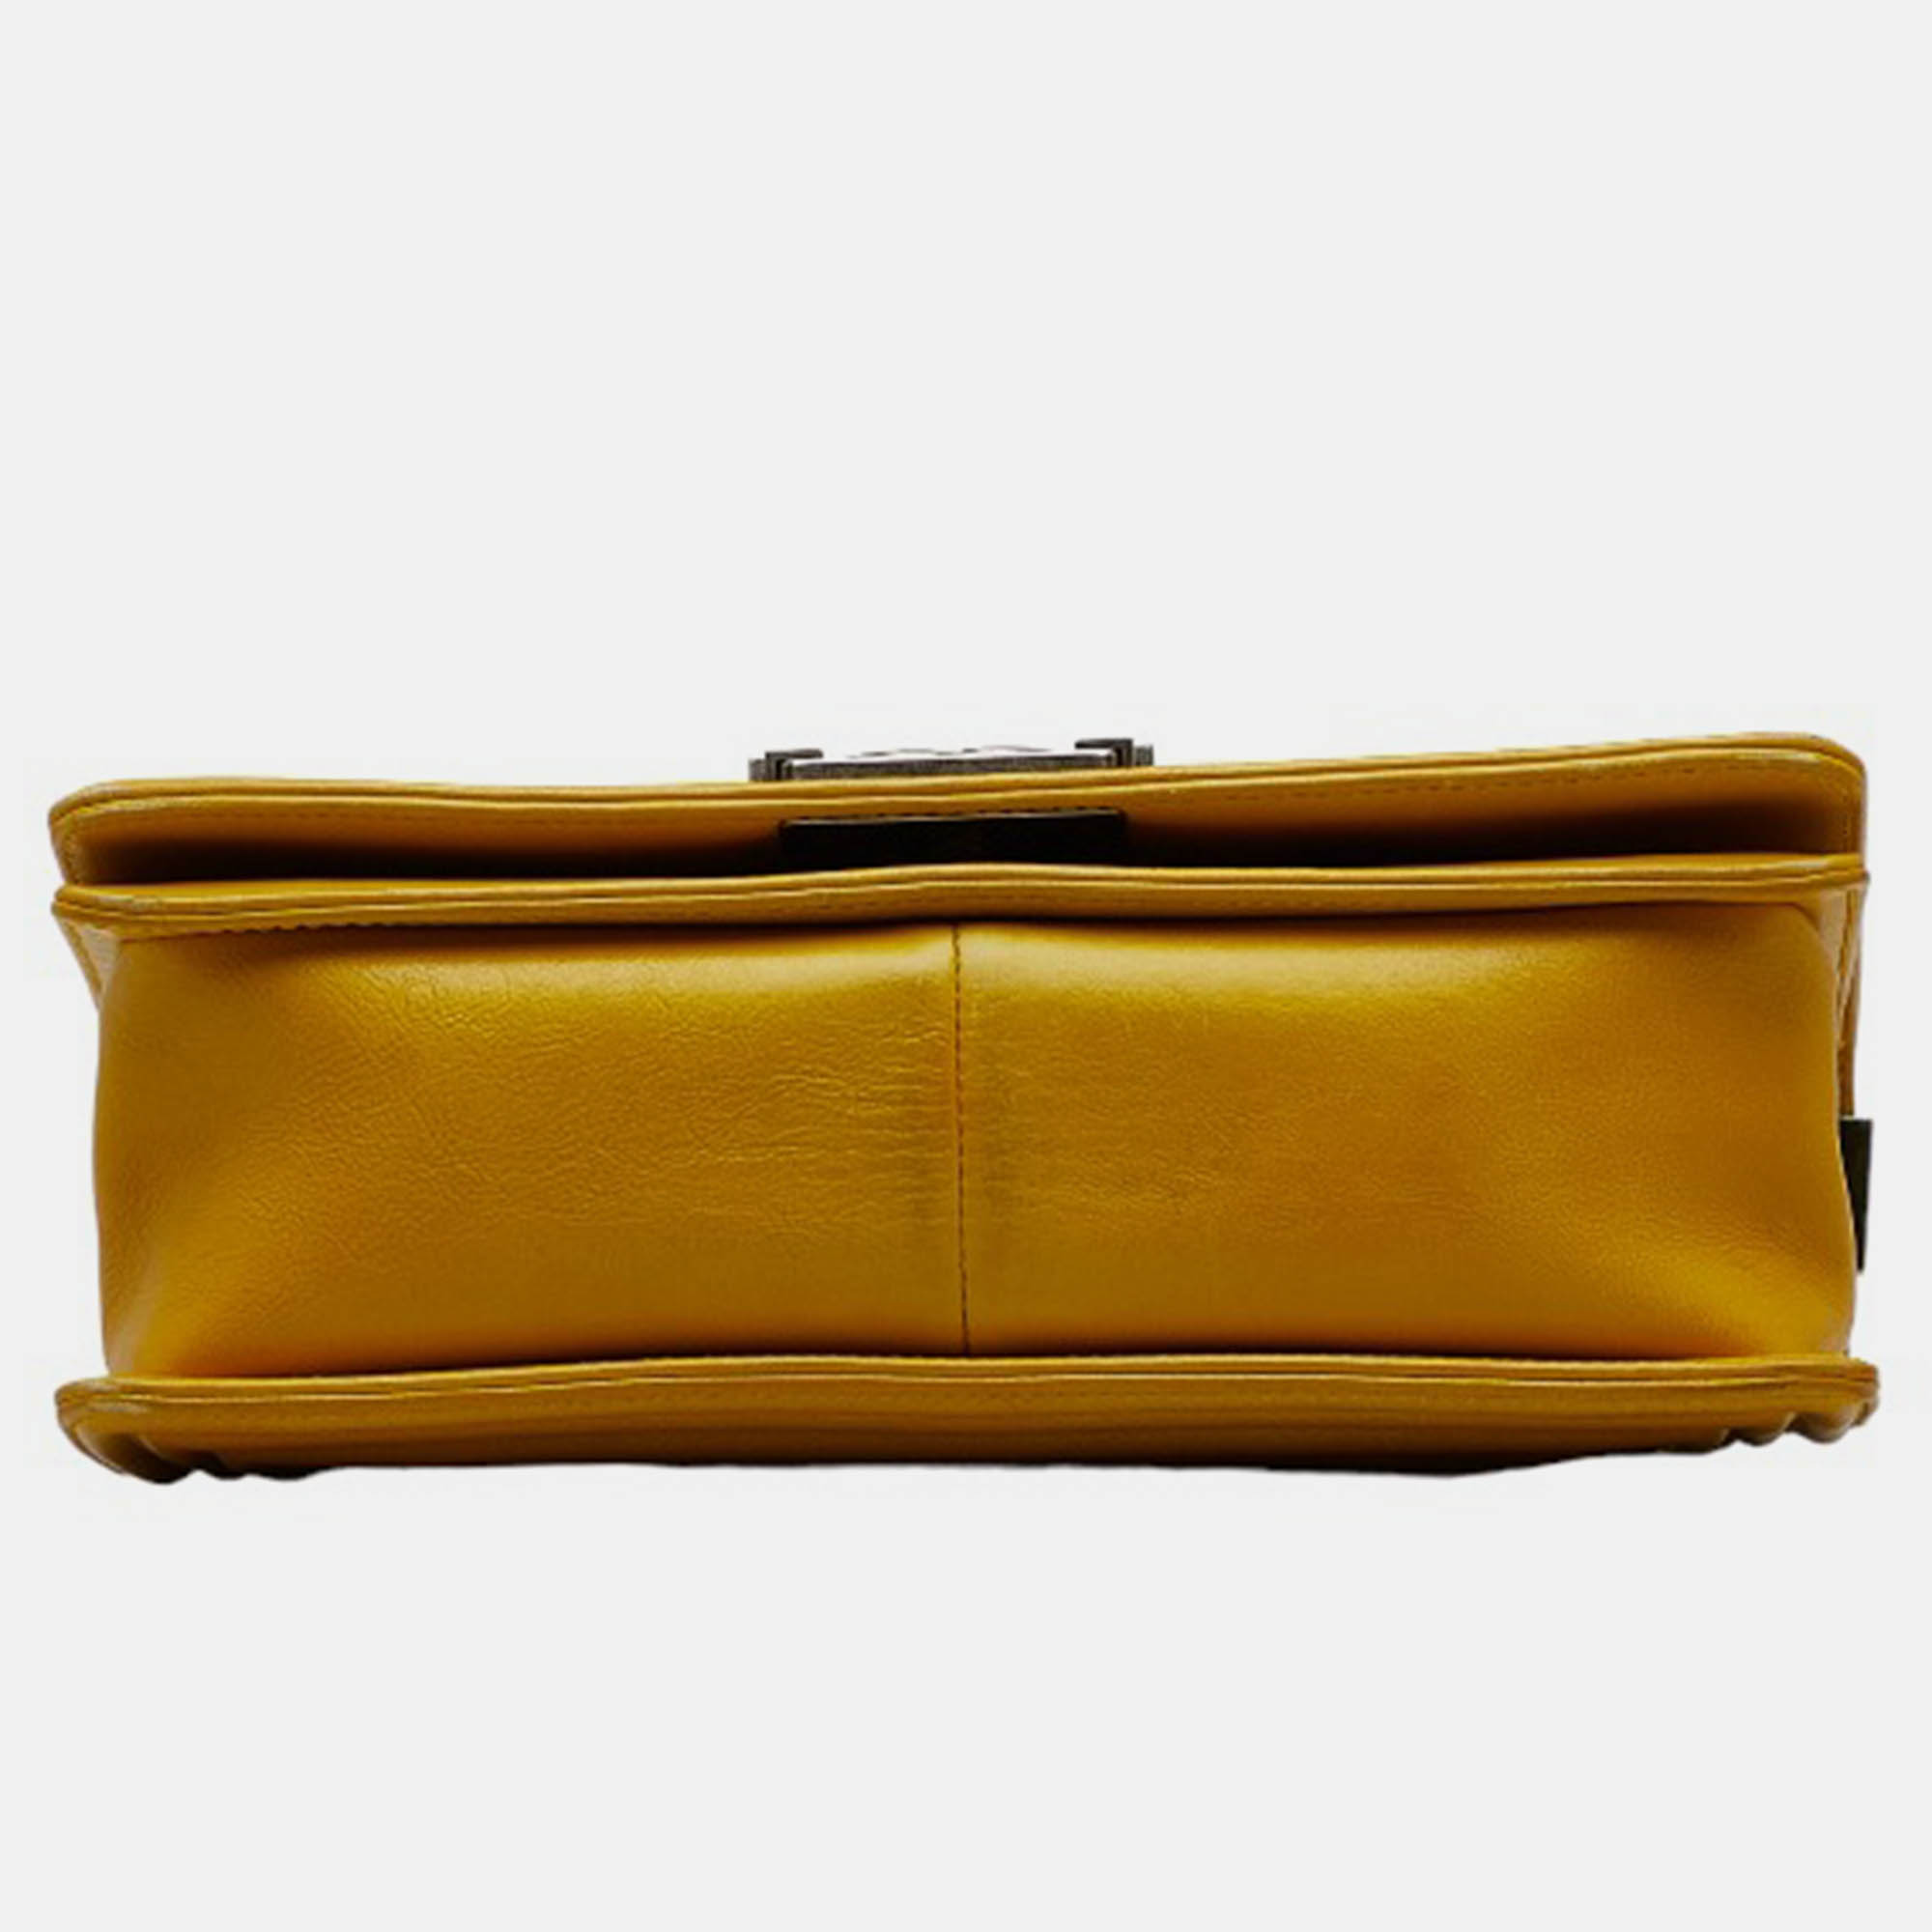 Chanel Yellow Medium Classic Le Boy Flap Bag